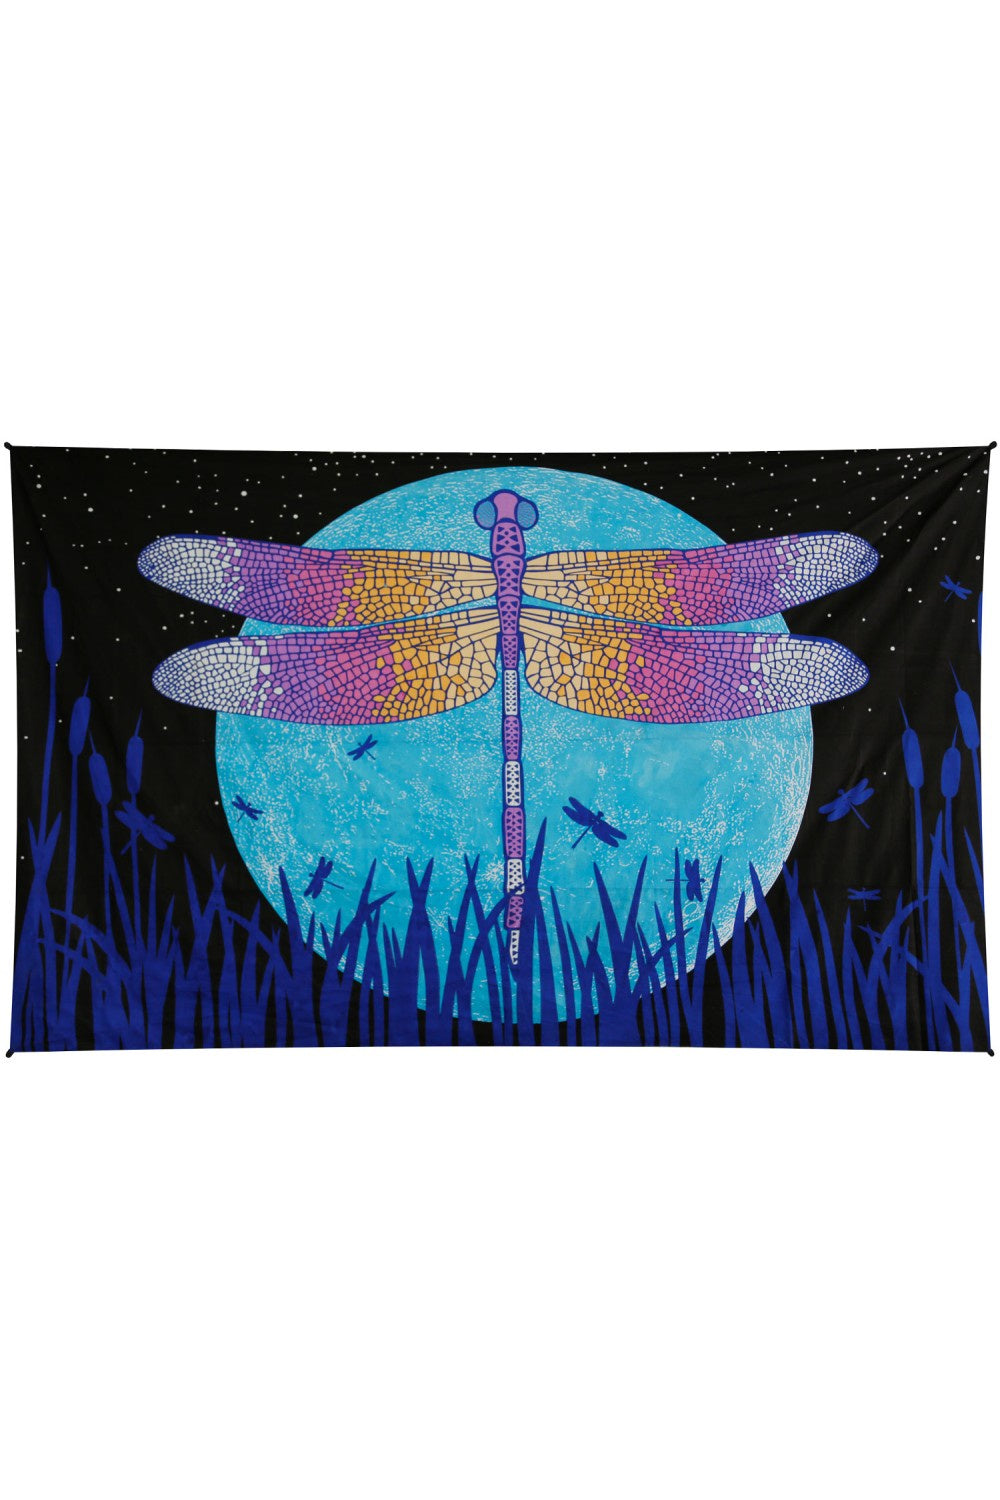 3D Glow in The Dark Dragonfly Moon Mini Tapestry 30x45